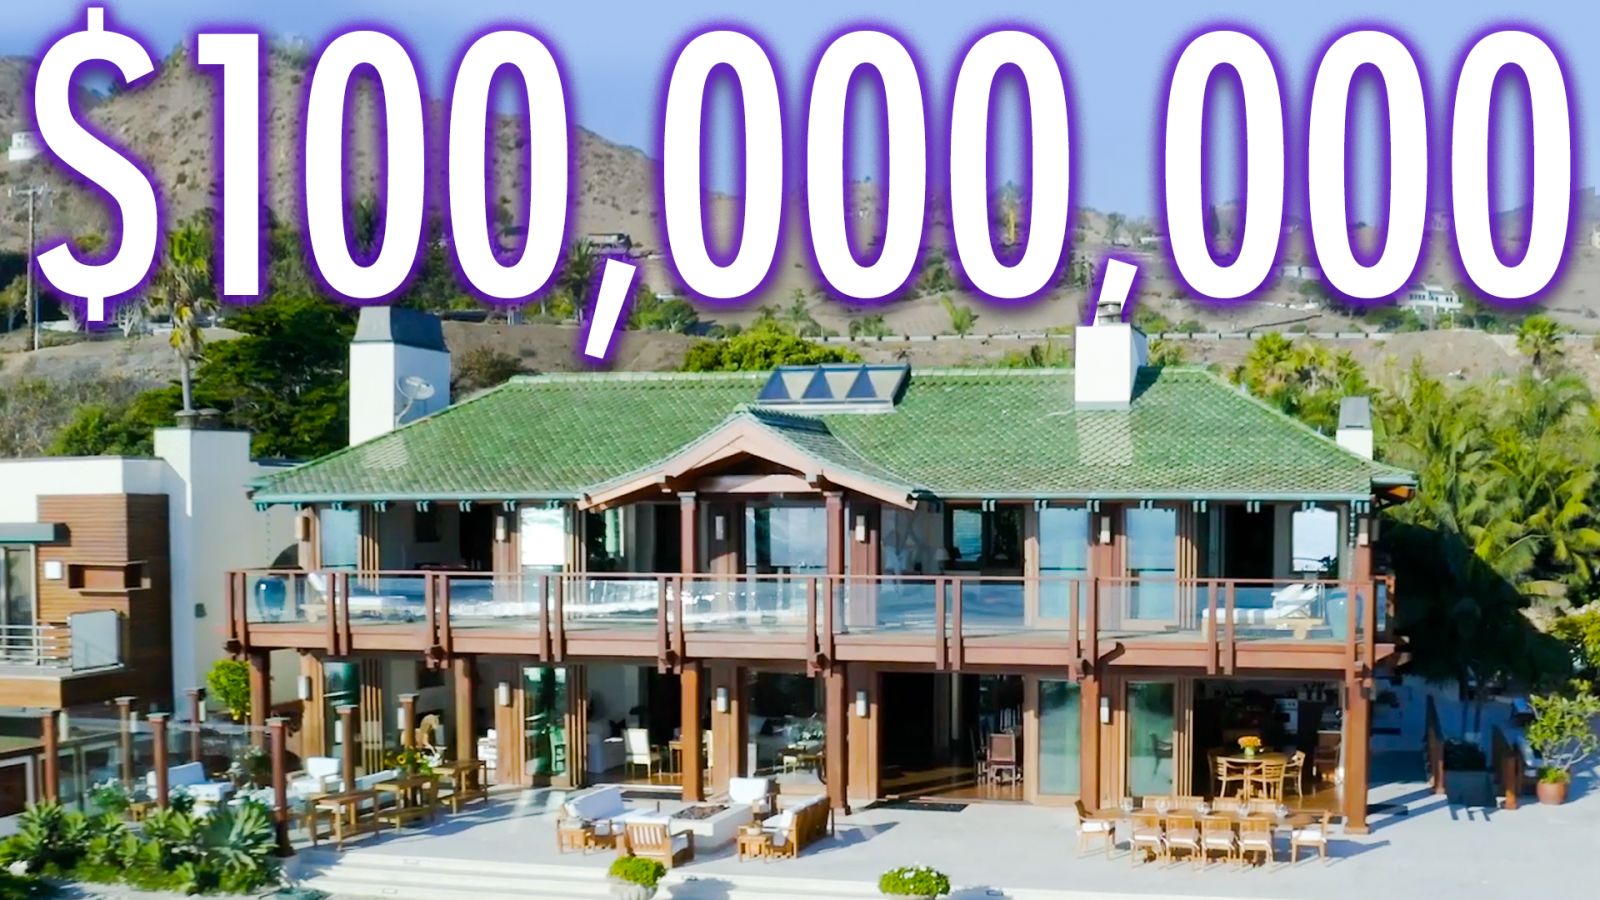 Inside Pierce Brosnan's $100M Malibu Beach Home